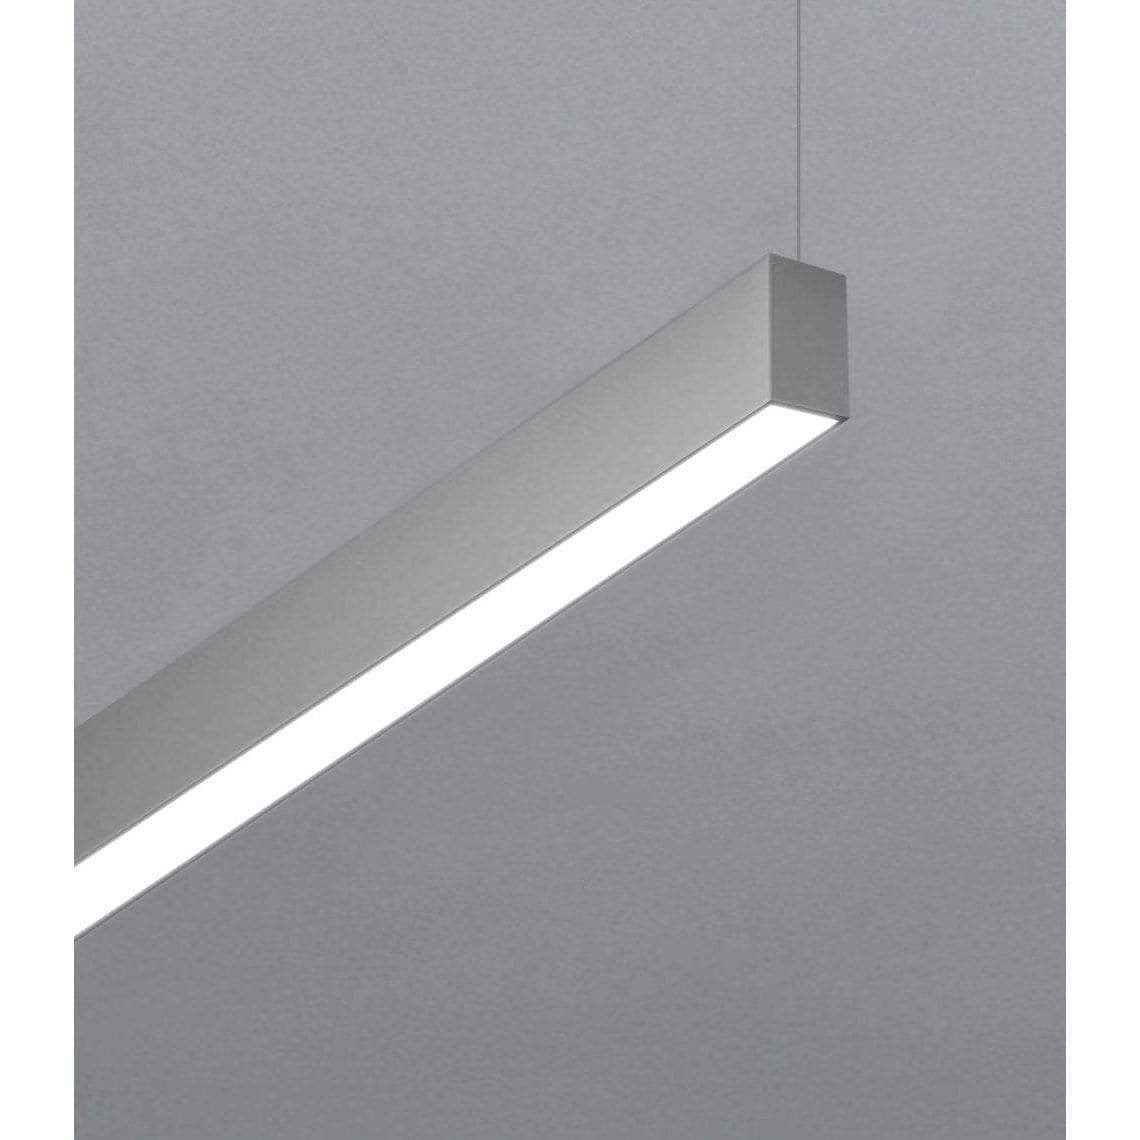 POE Texas Lighting Denton Suspended Linear PoE Lights - Sample 1.3" x 8' Linear Diffuser 8 ft, 4000K (Surface)